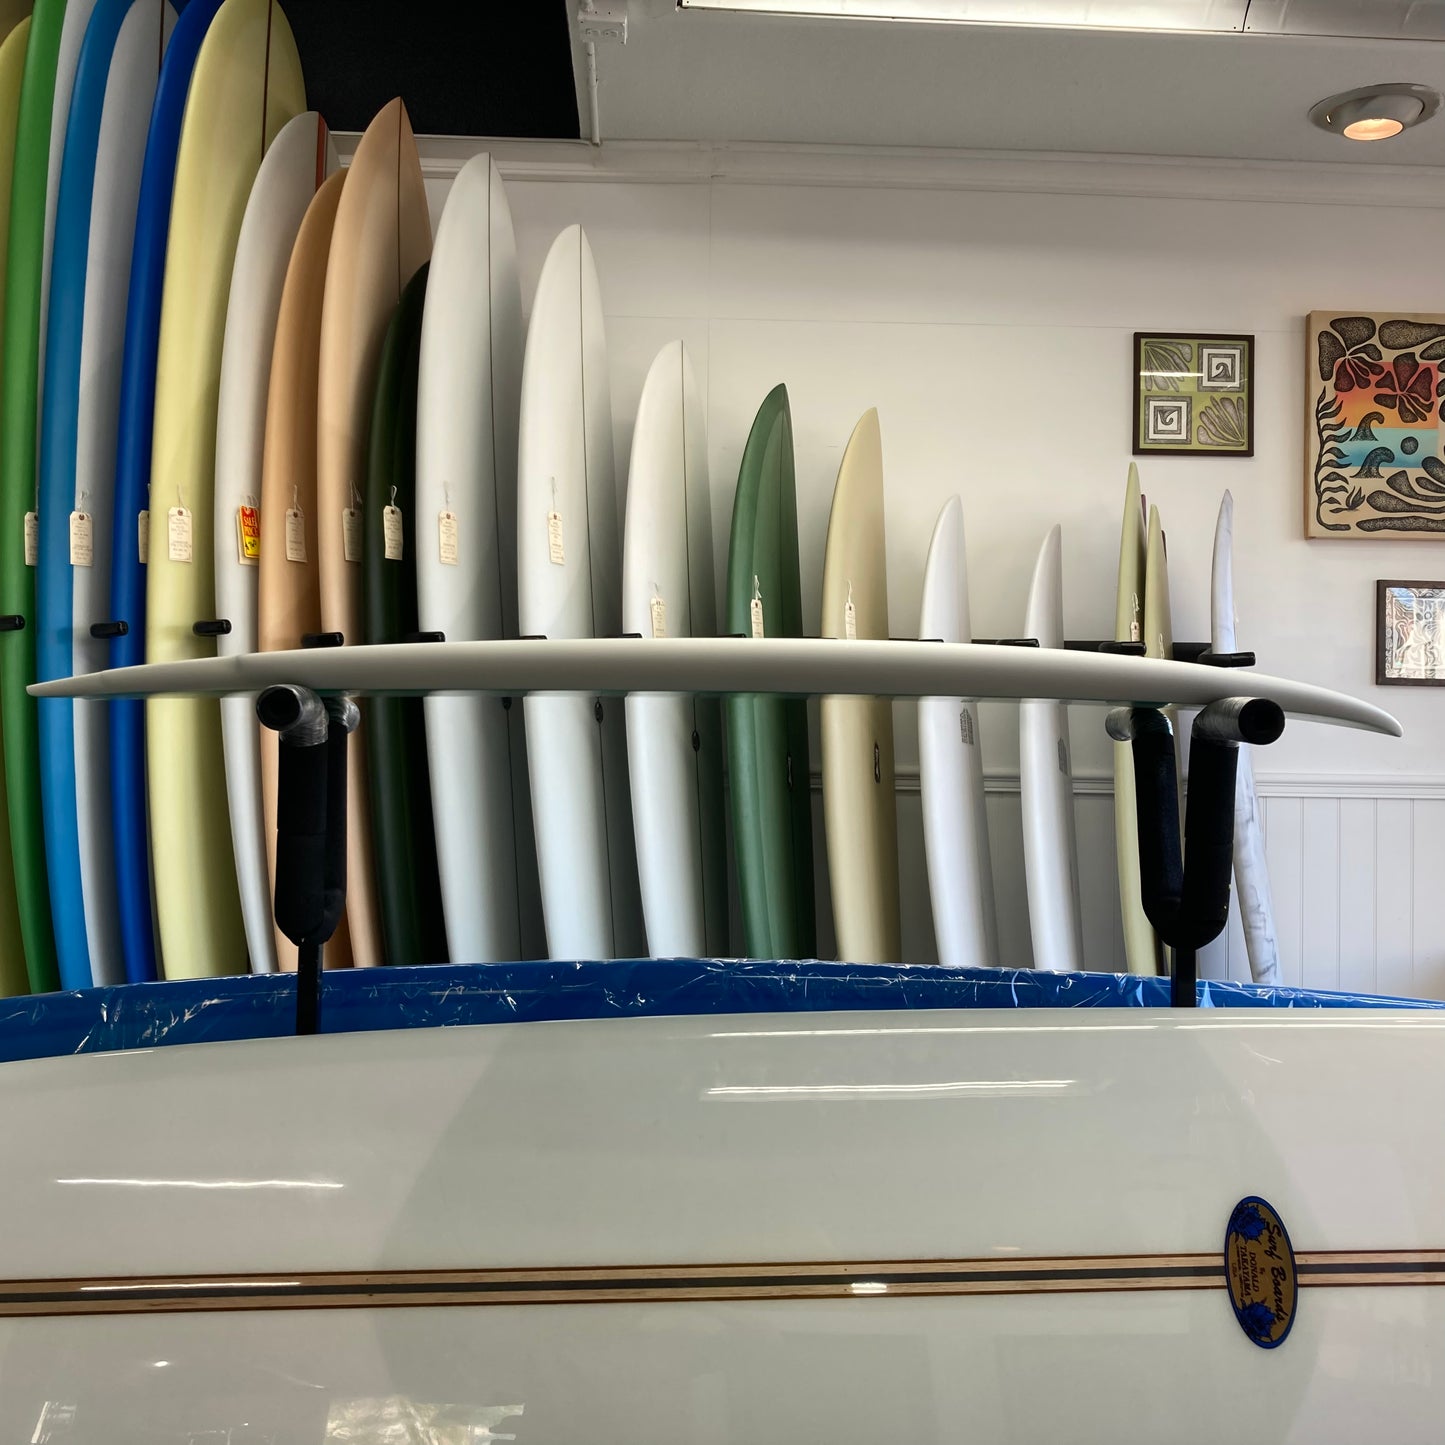 Thomas Surfboards - 5'6" Crowe Quad